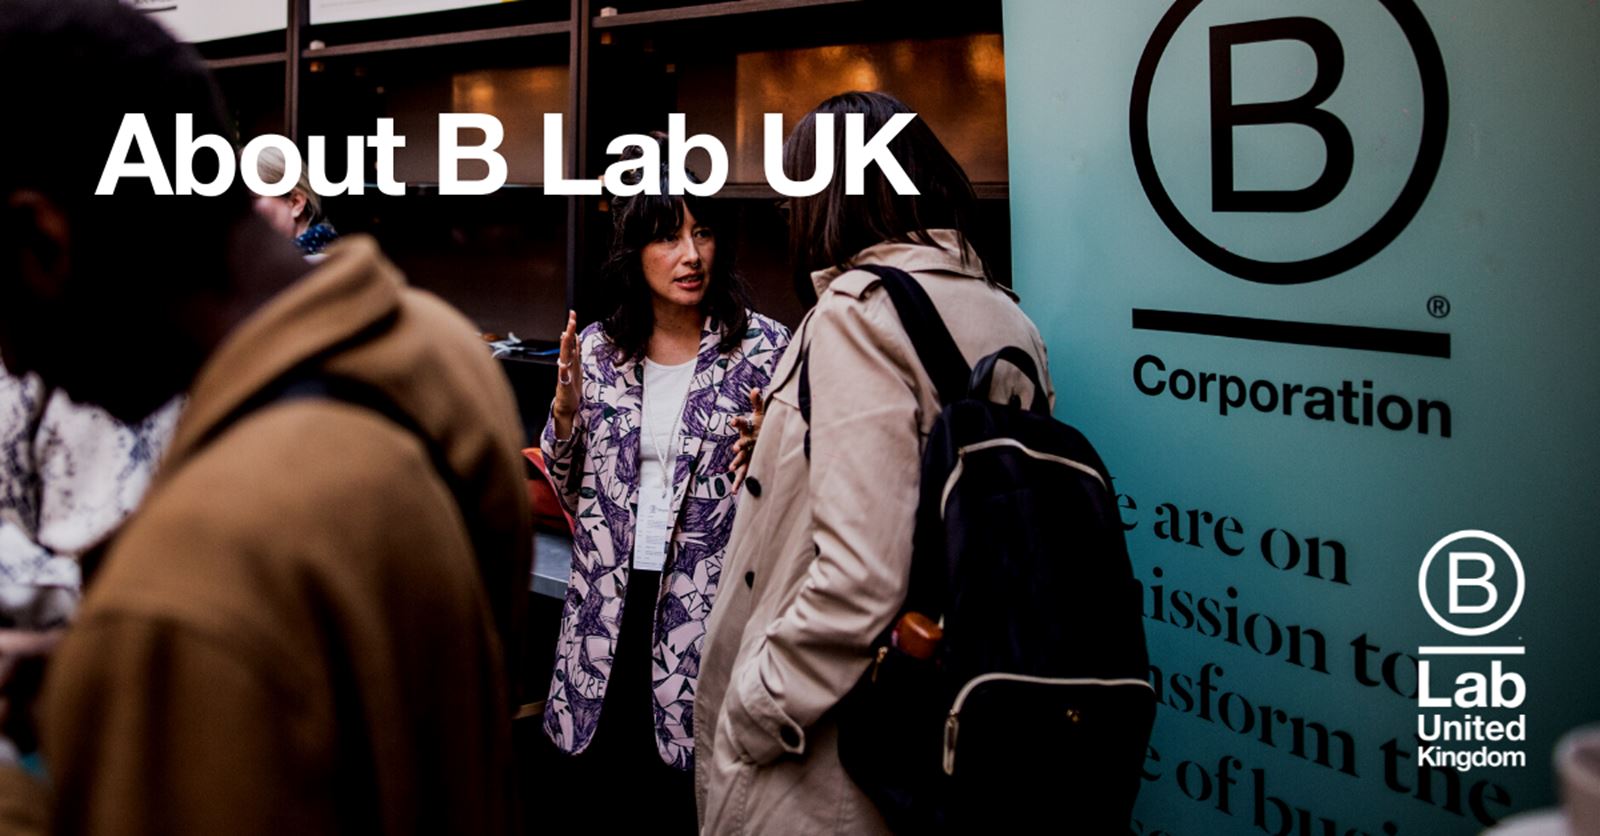 Barley Communications Limited - Certified B Corporation - B Lab Global